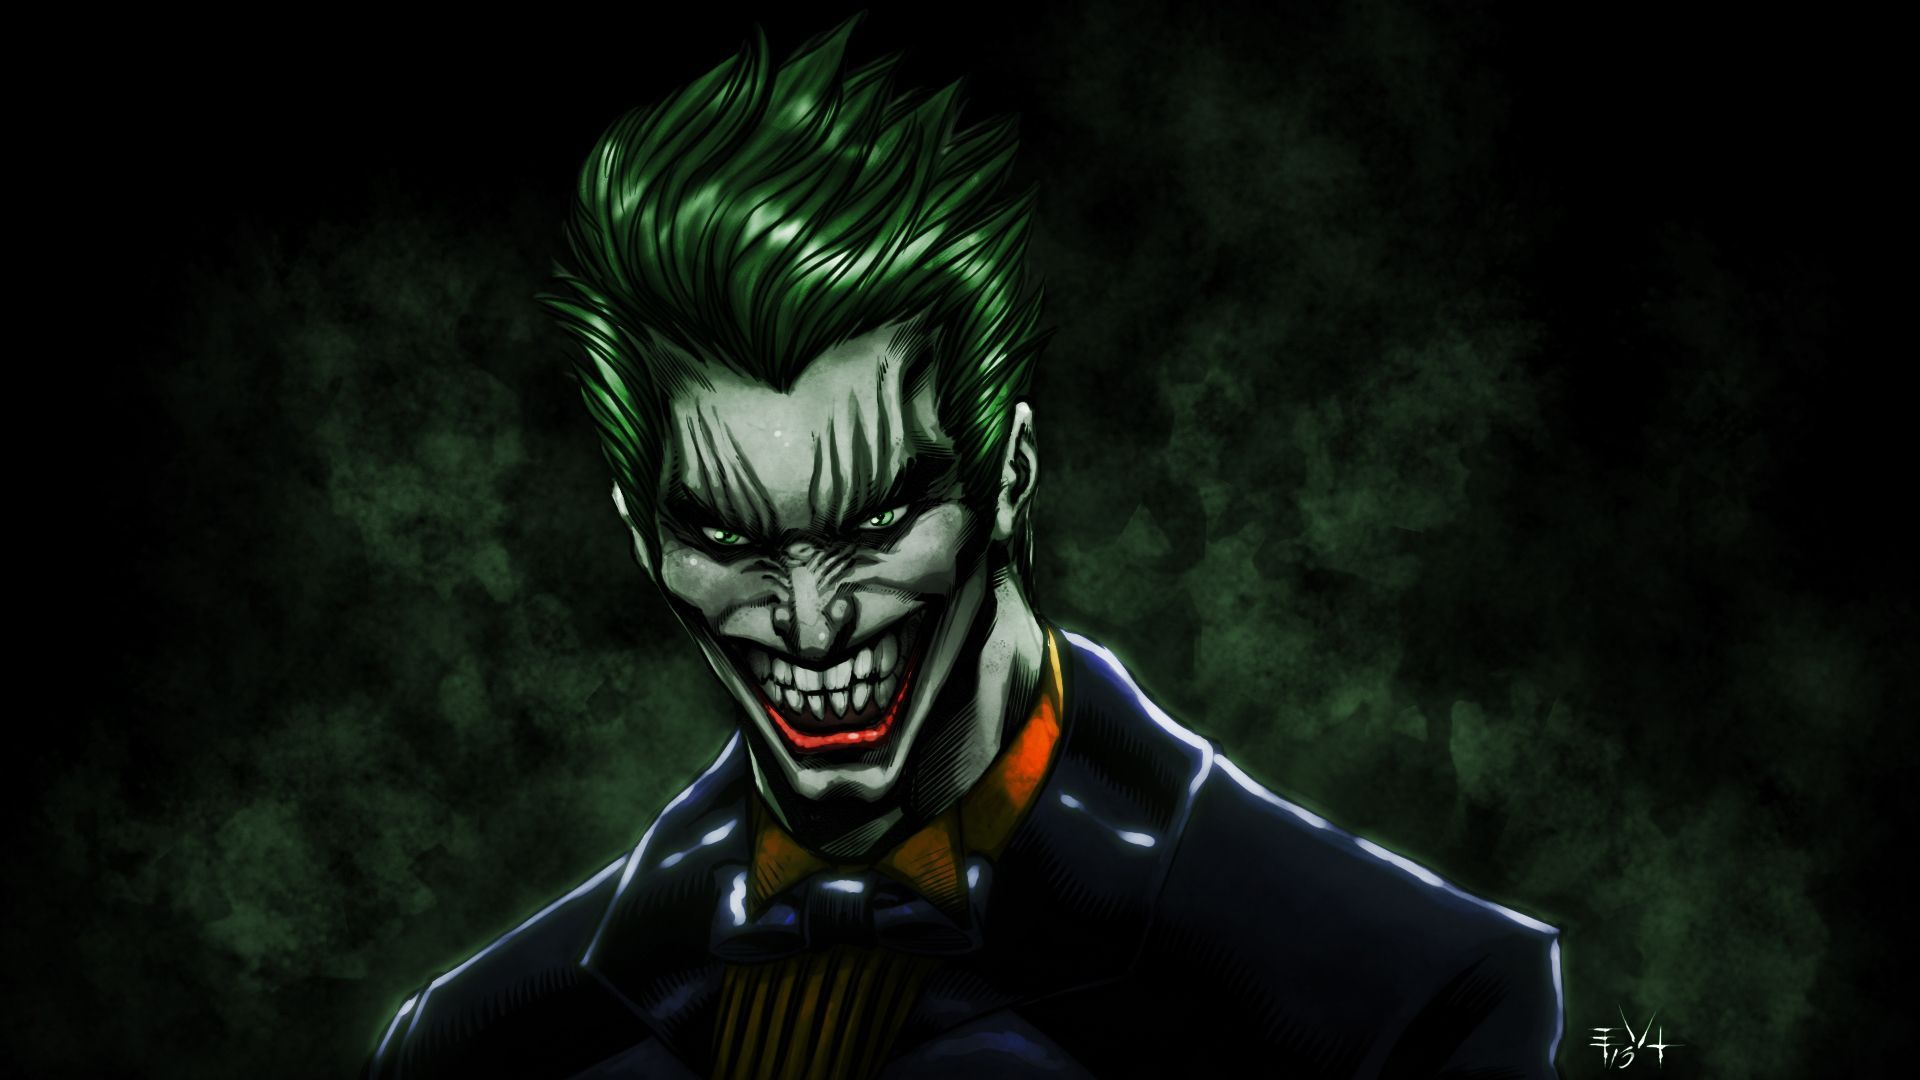 The Joker wallpaper and video. Joker wallpaper, Joker image, Batman joker wallpaper